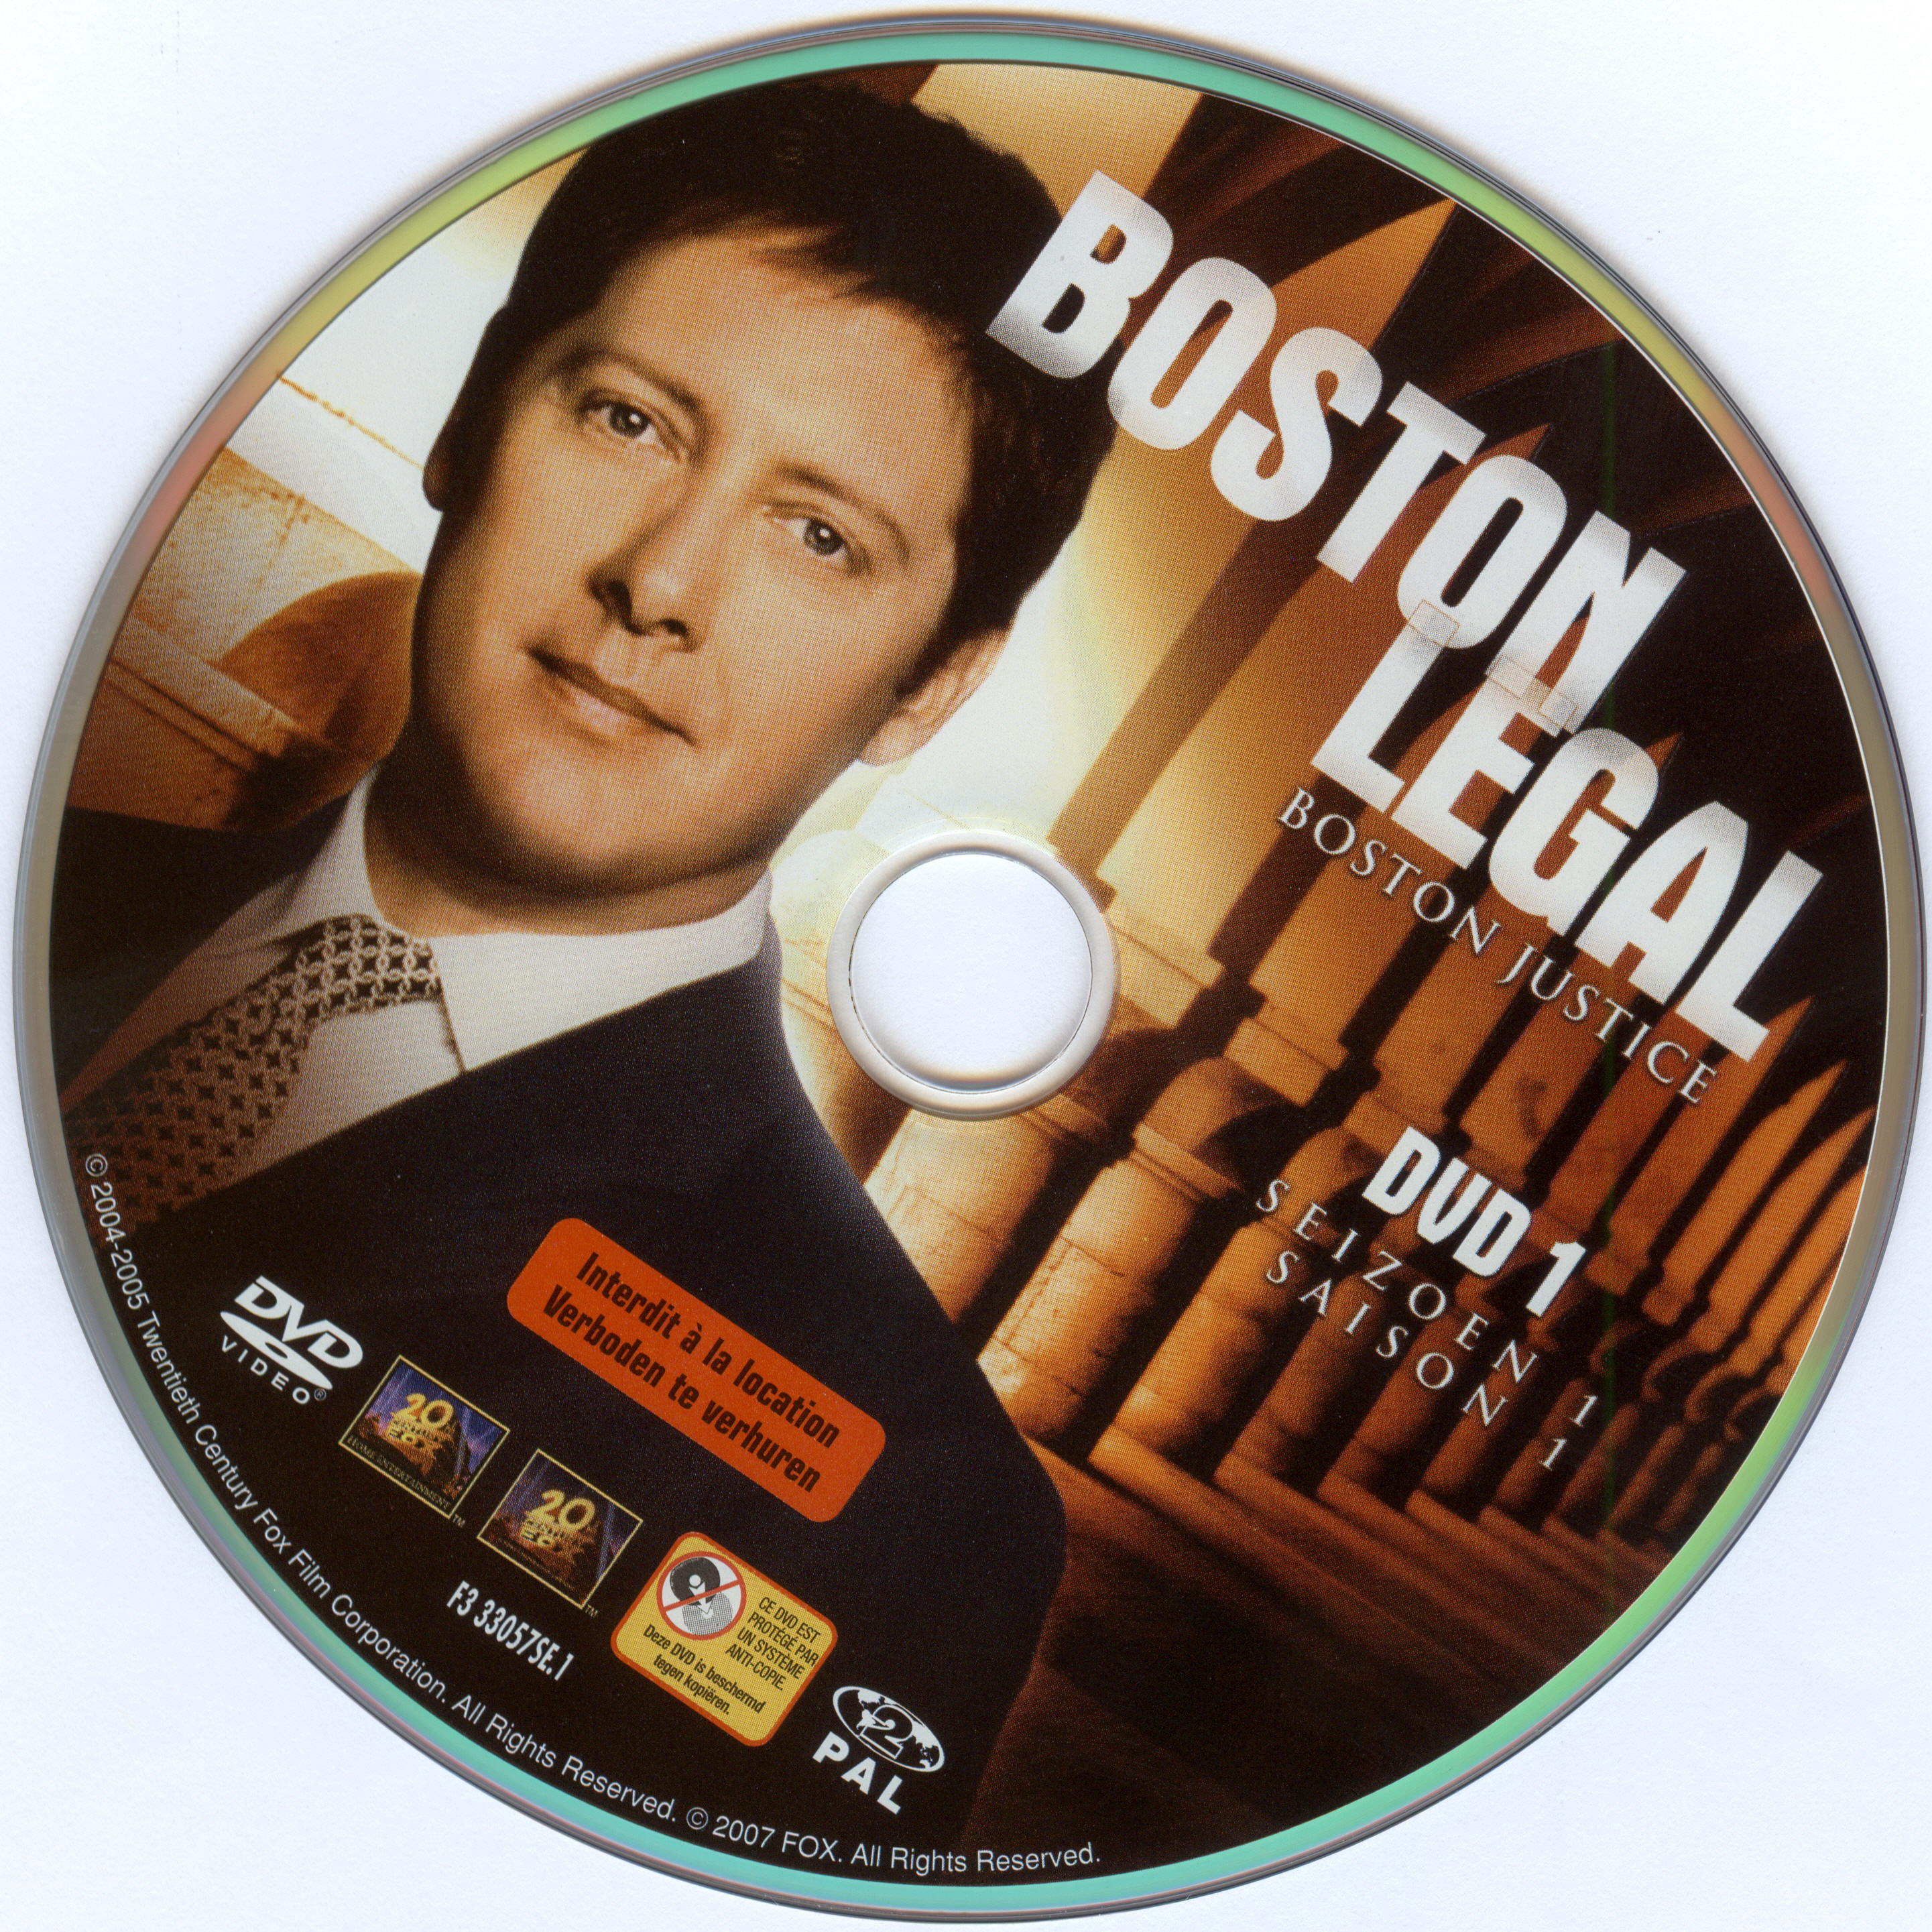 Boston legal - Boston justice Saison 1 DISC 1